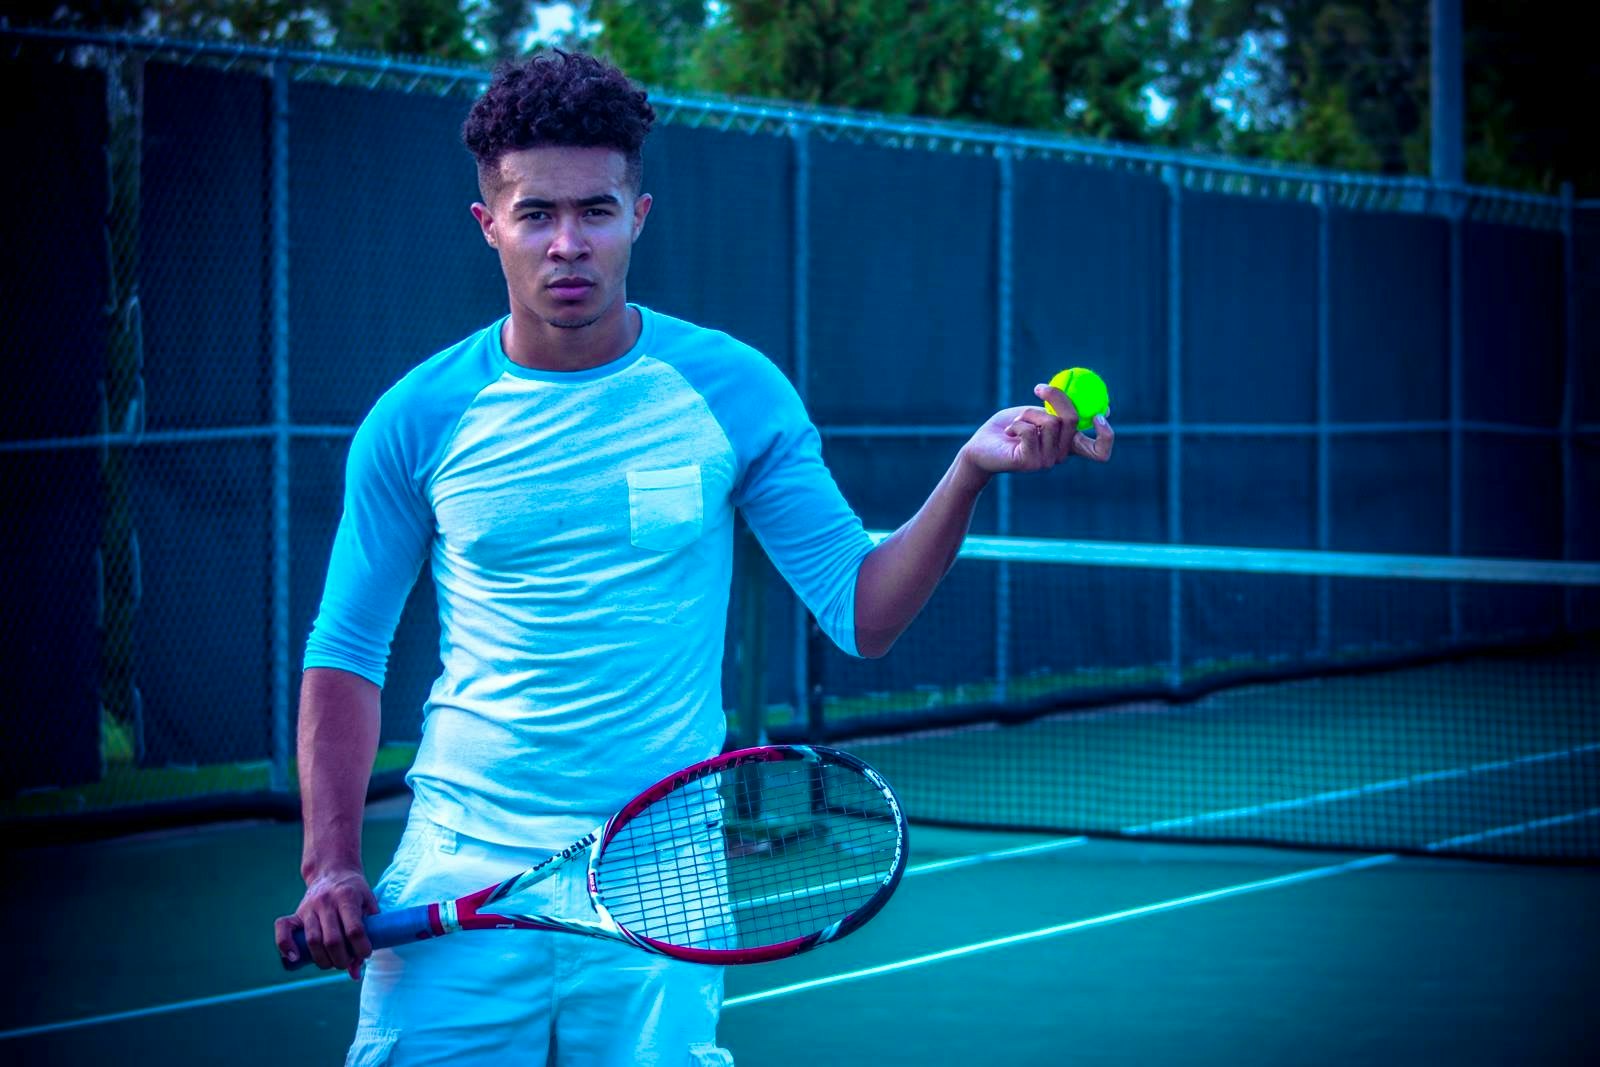 Vincent C. teaches tennis lessons in Oshkosh, WI